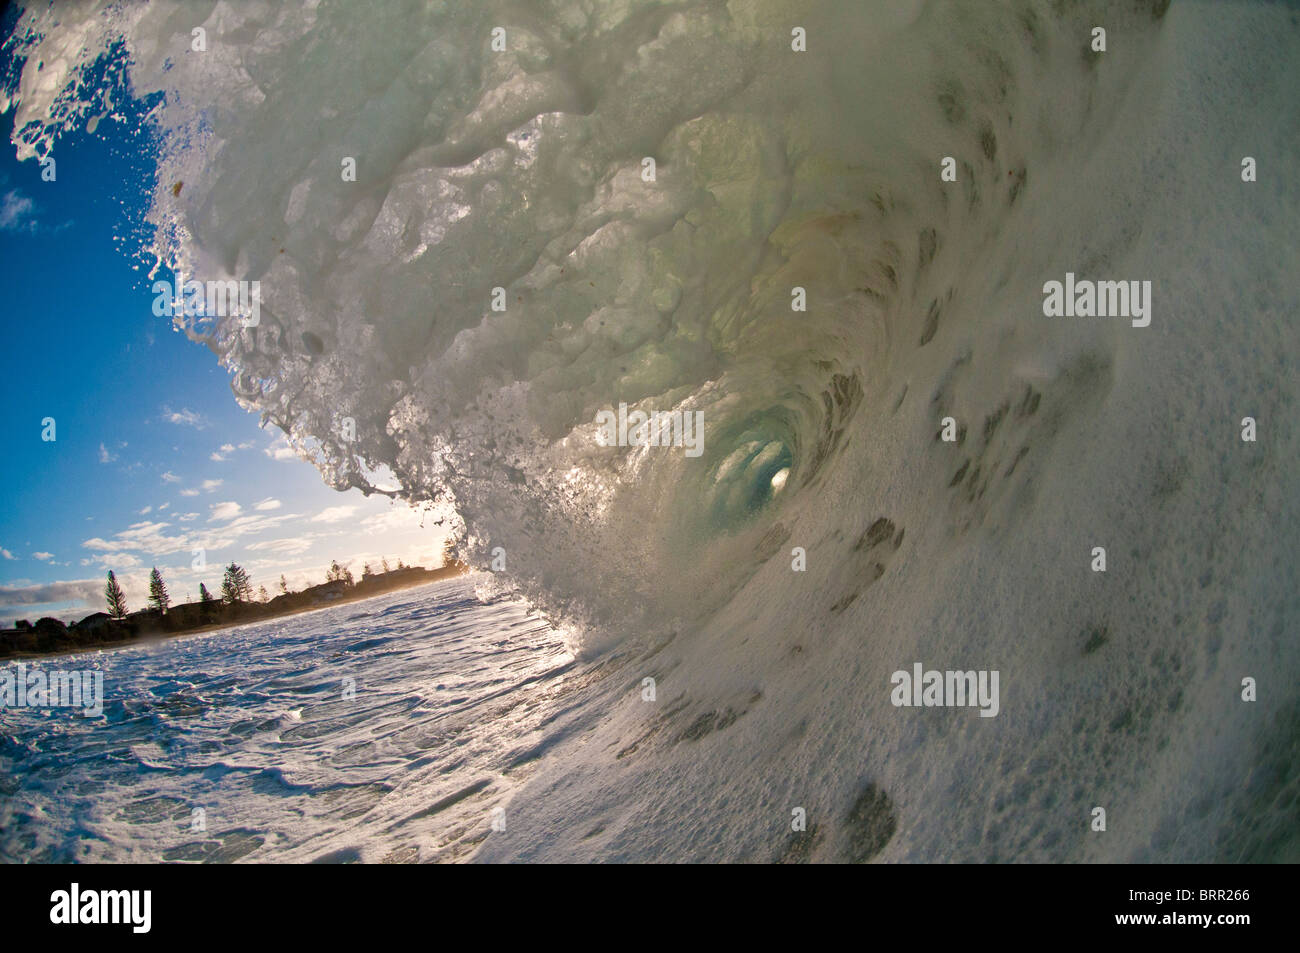 Foamy tubing wave shot from the water, Kirra, Queensland, Australia Stock Photo